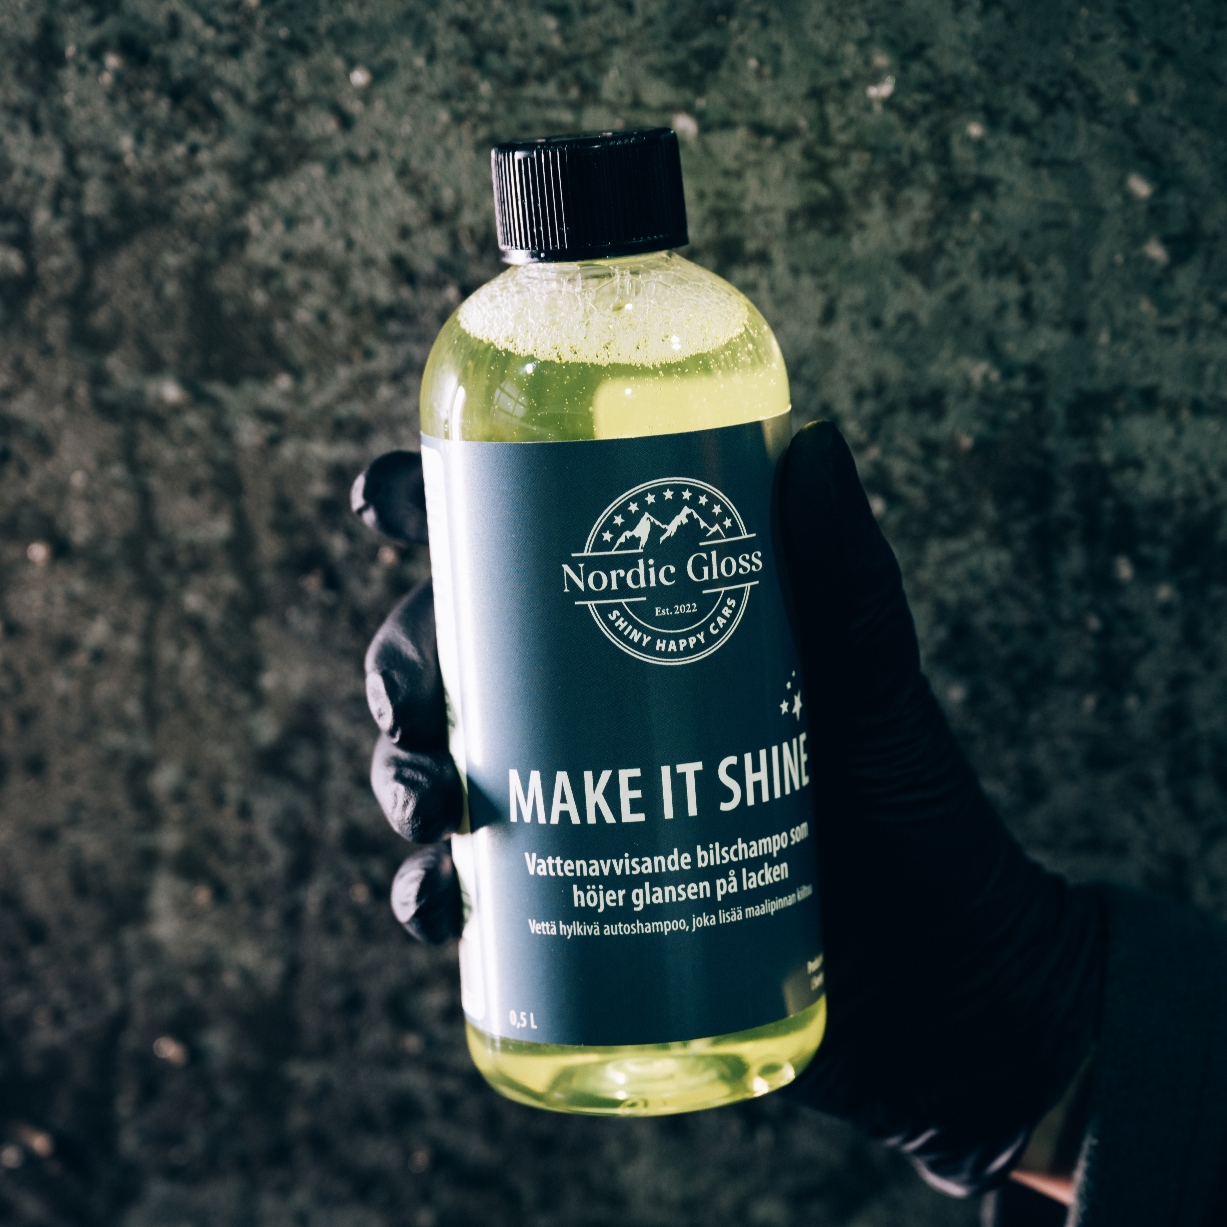 Make it Shine - vattenavvisande bilschampo